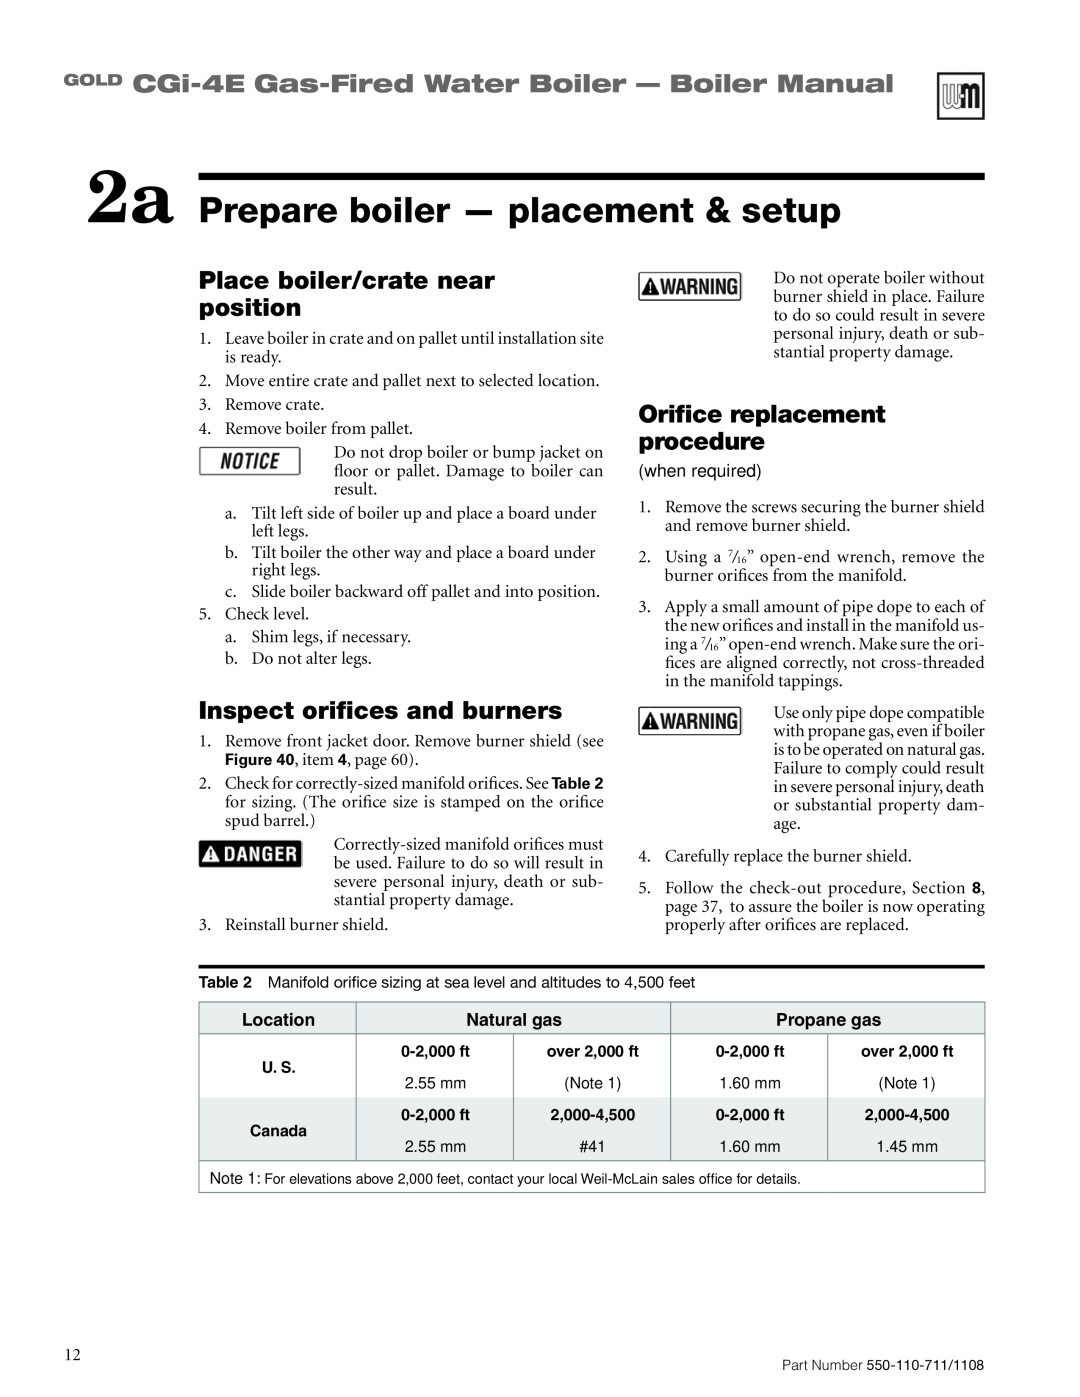 Weil-McLain CGI-4E 2a Prepare boiler - placement & setup, GOLD CGi-4E Gas-FiredWater Boiler - Boiler Manual, Location 